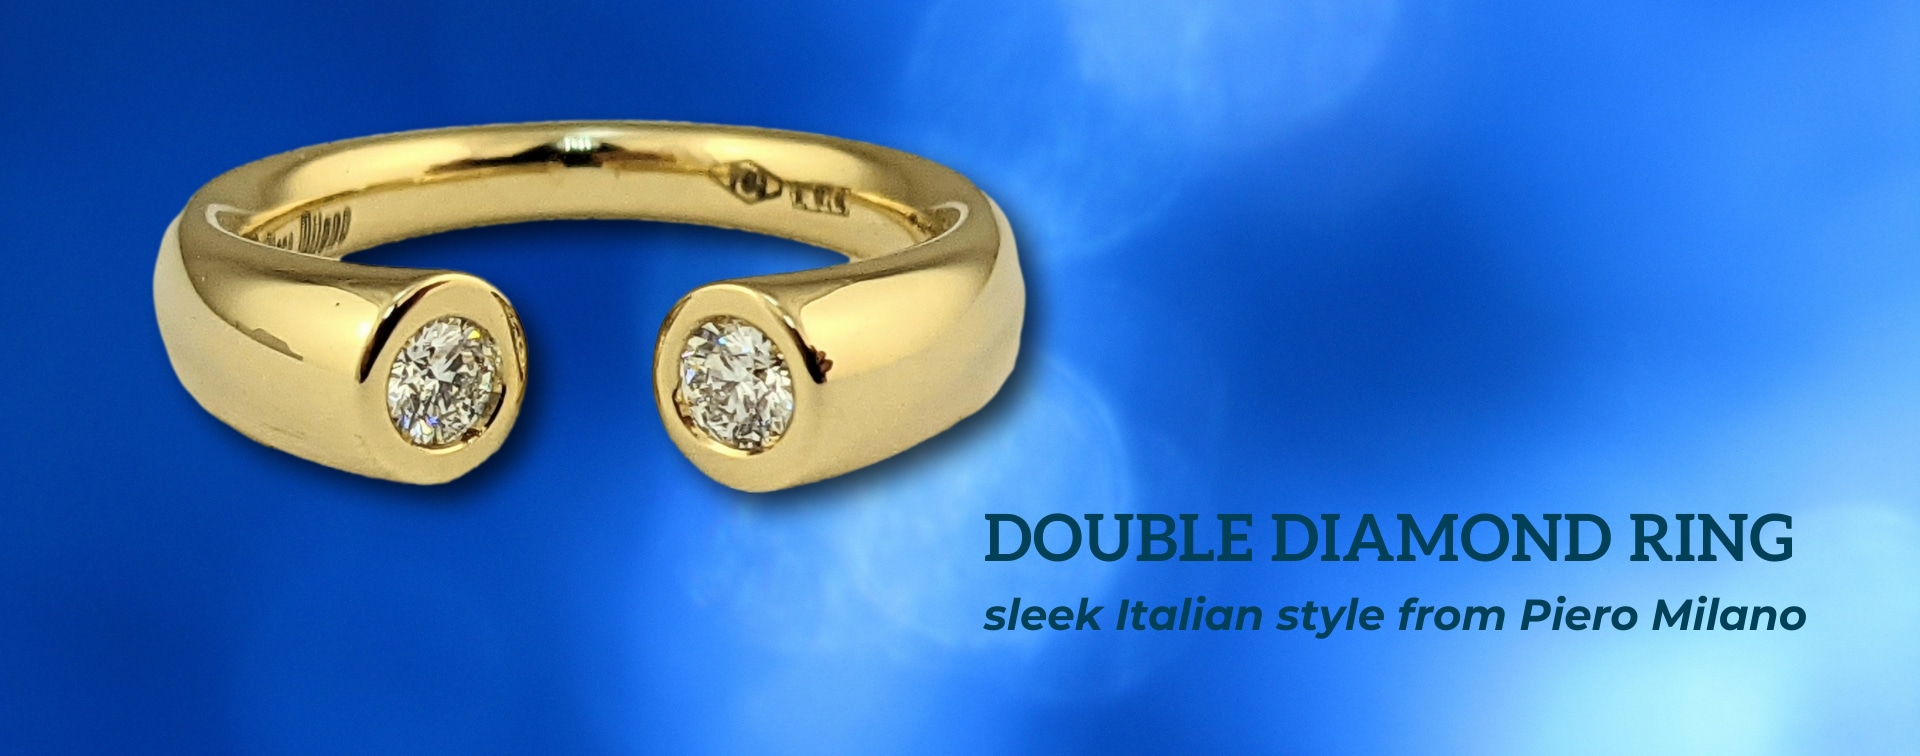 double diamond ring from Piero Milano